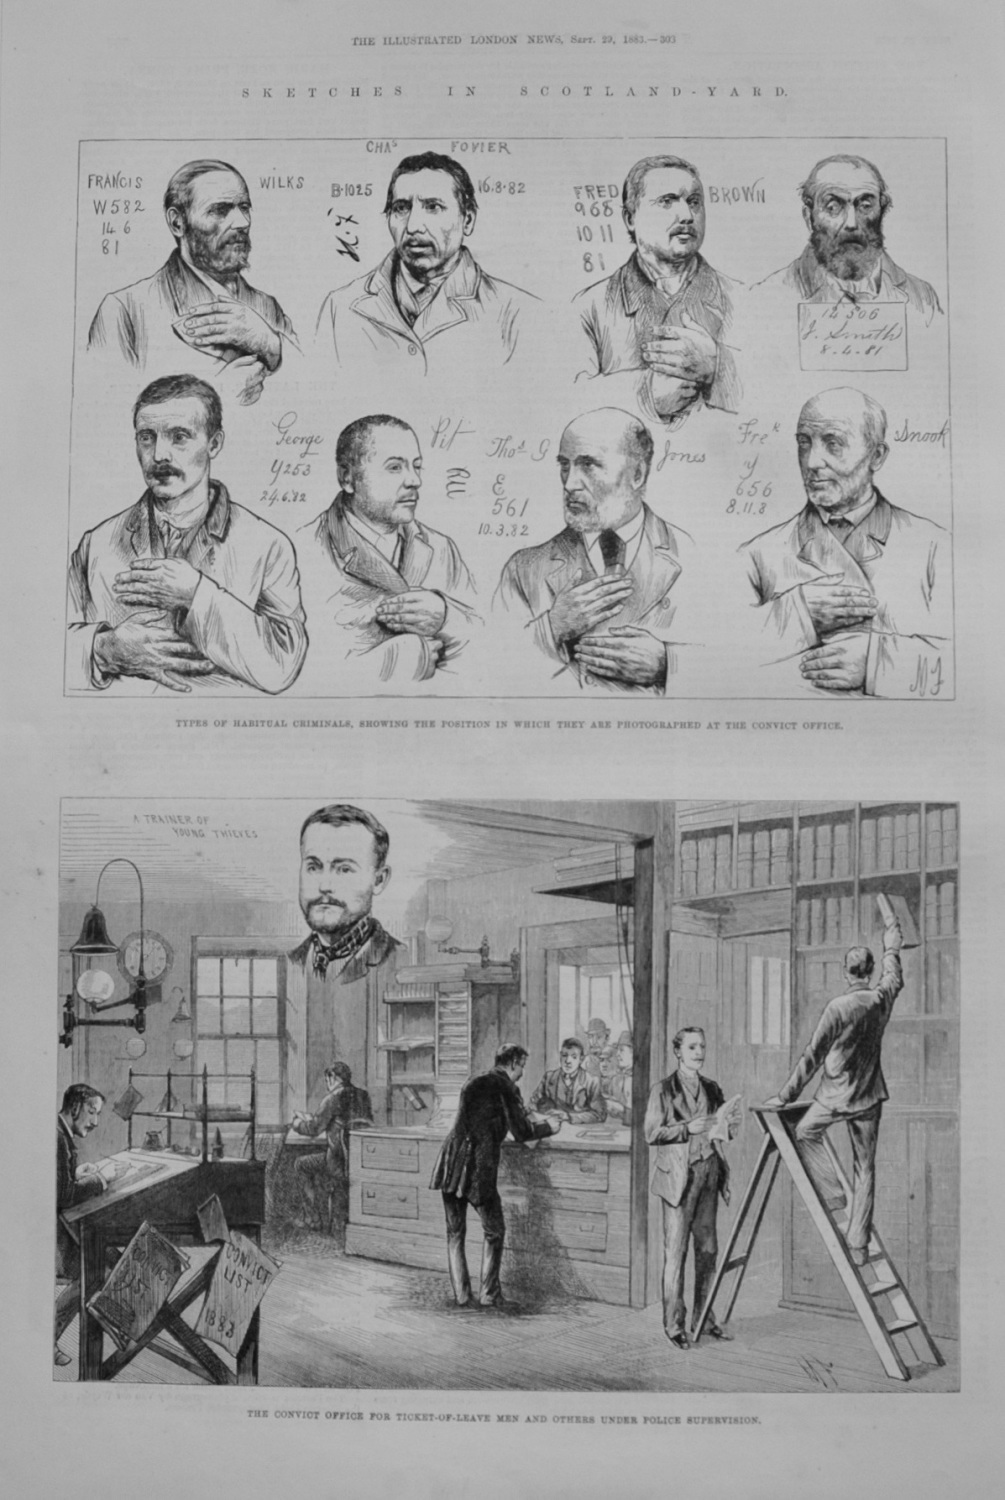 Sketches in Scotland Yard - 1883